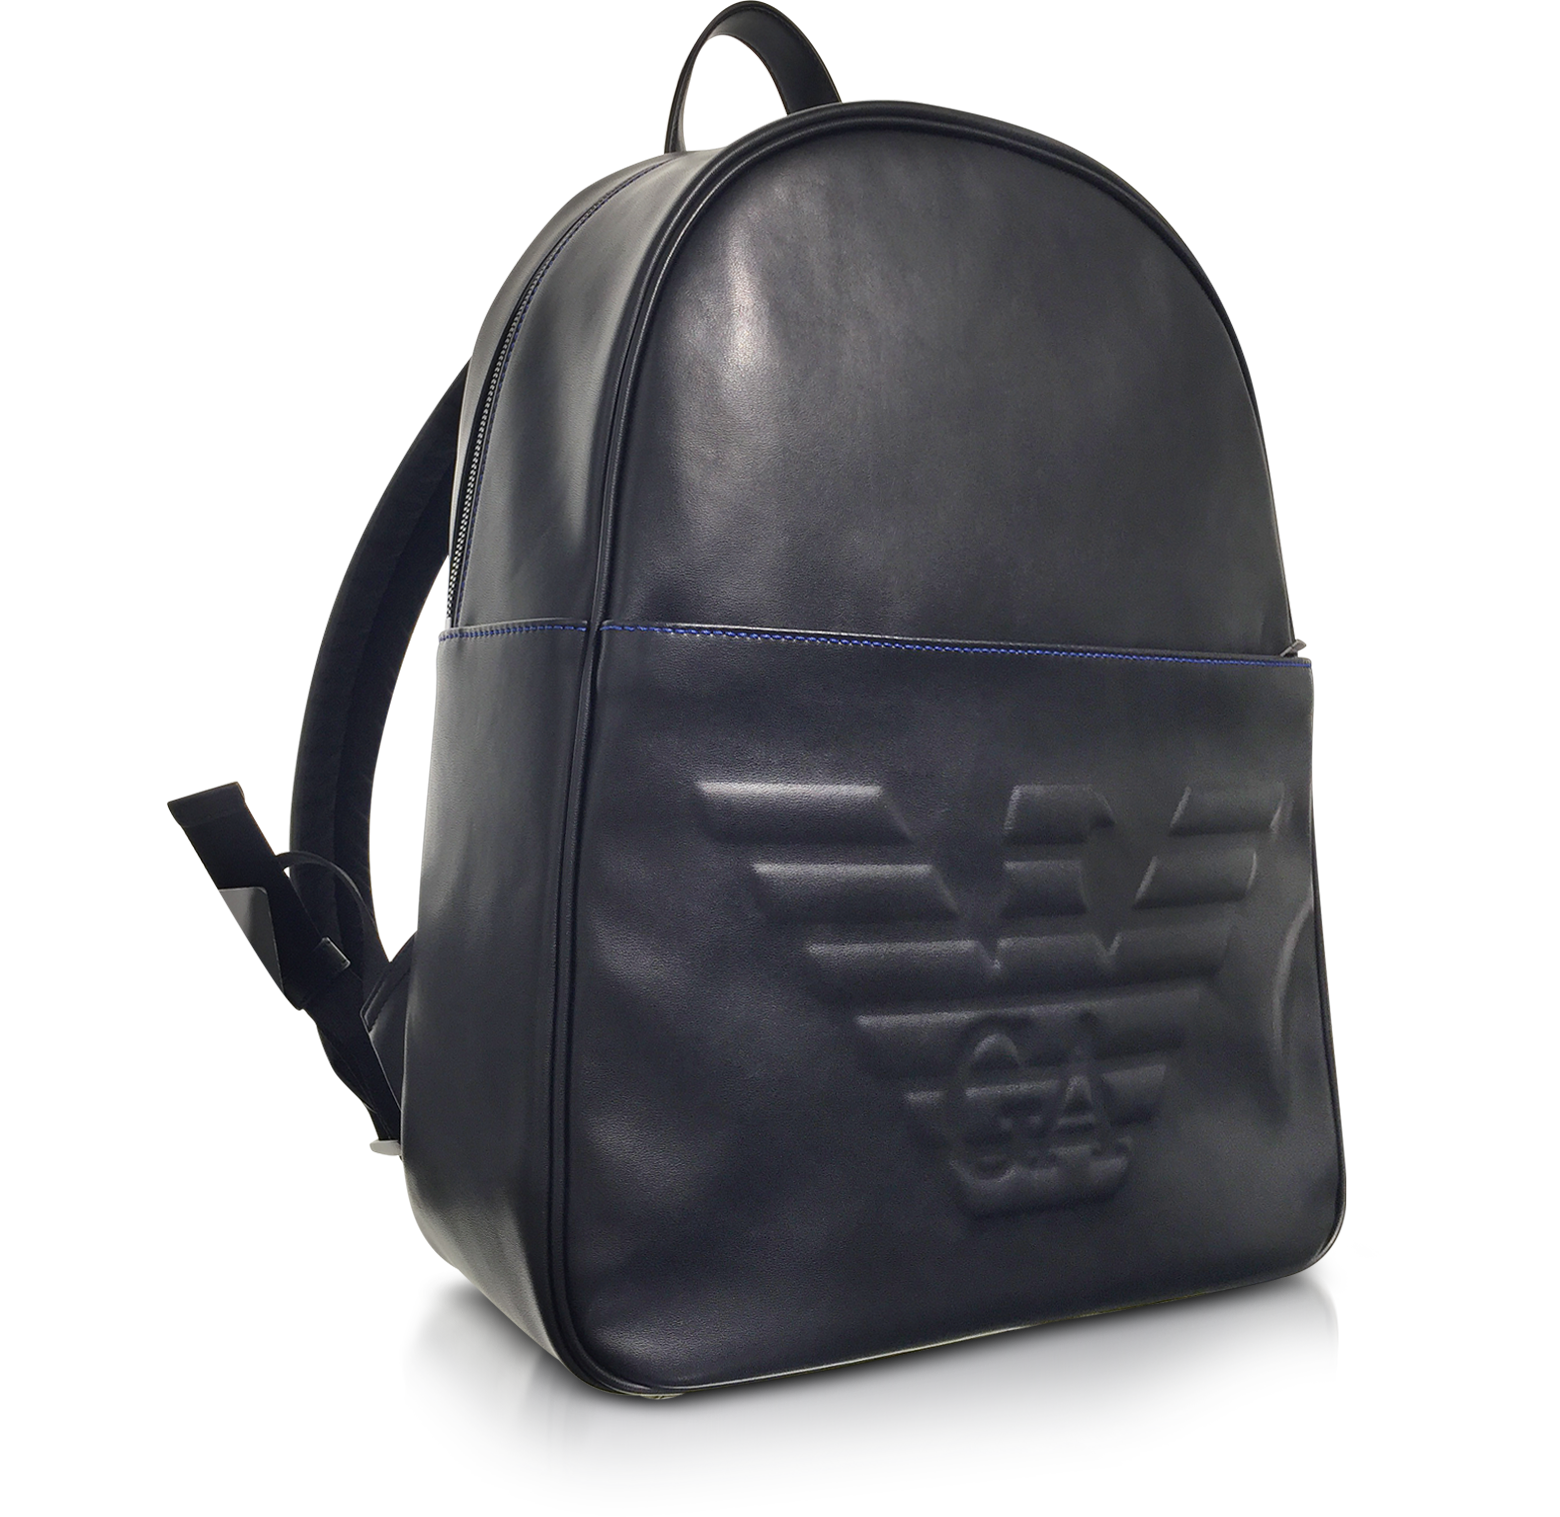 Emporio Armani Men's Embossed Leather Backpack - Black - Backpacks